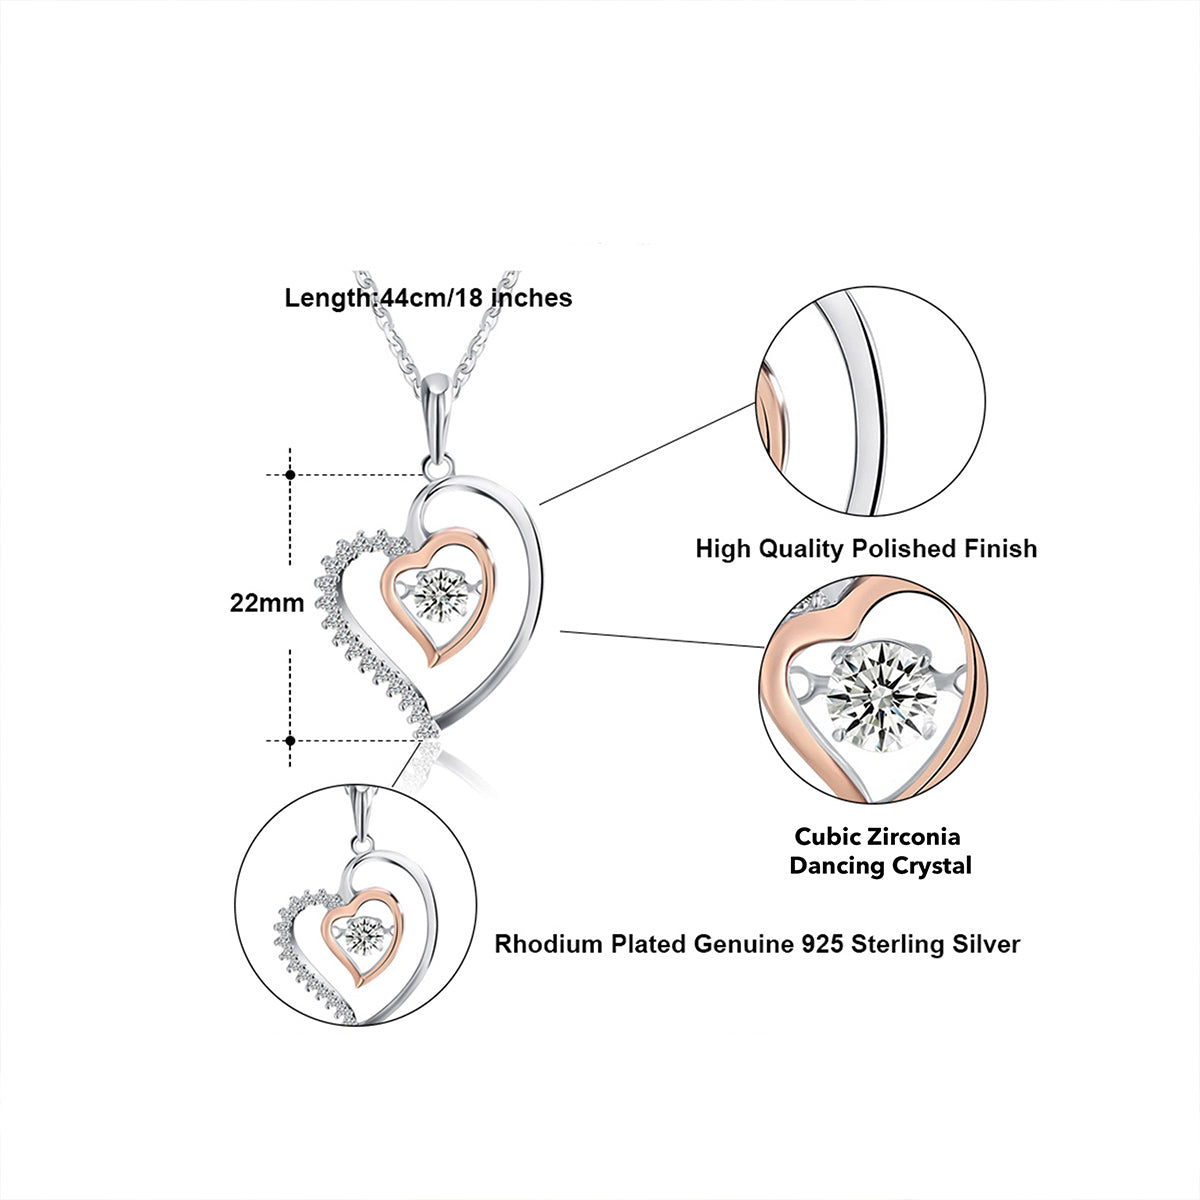 Soul Mate Noun - Luxe Heart Necklace Gift Set